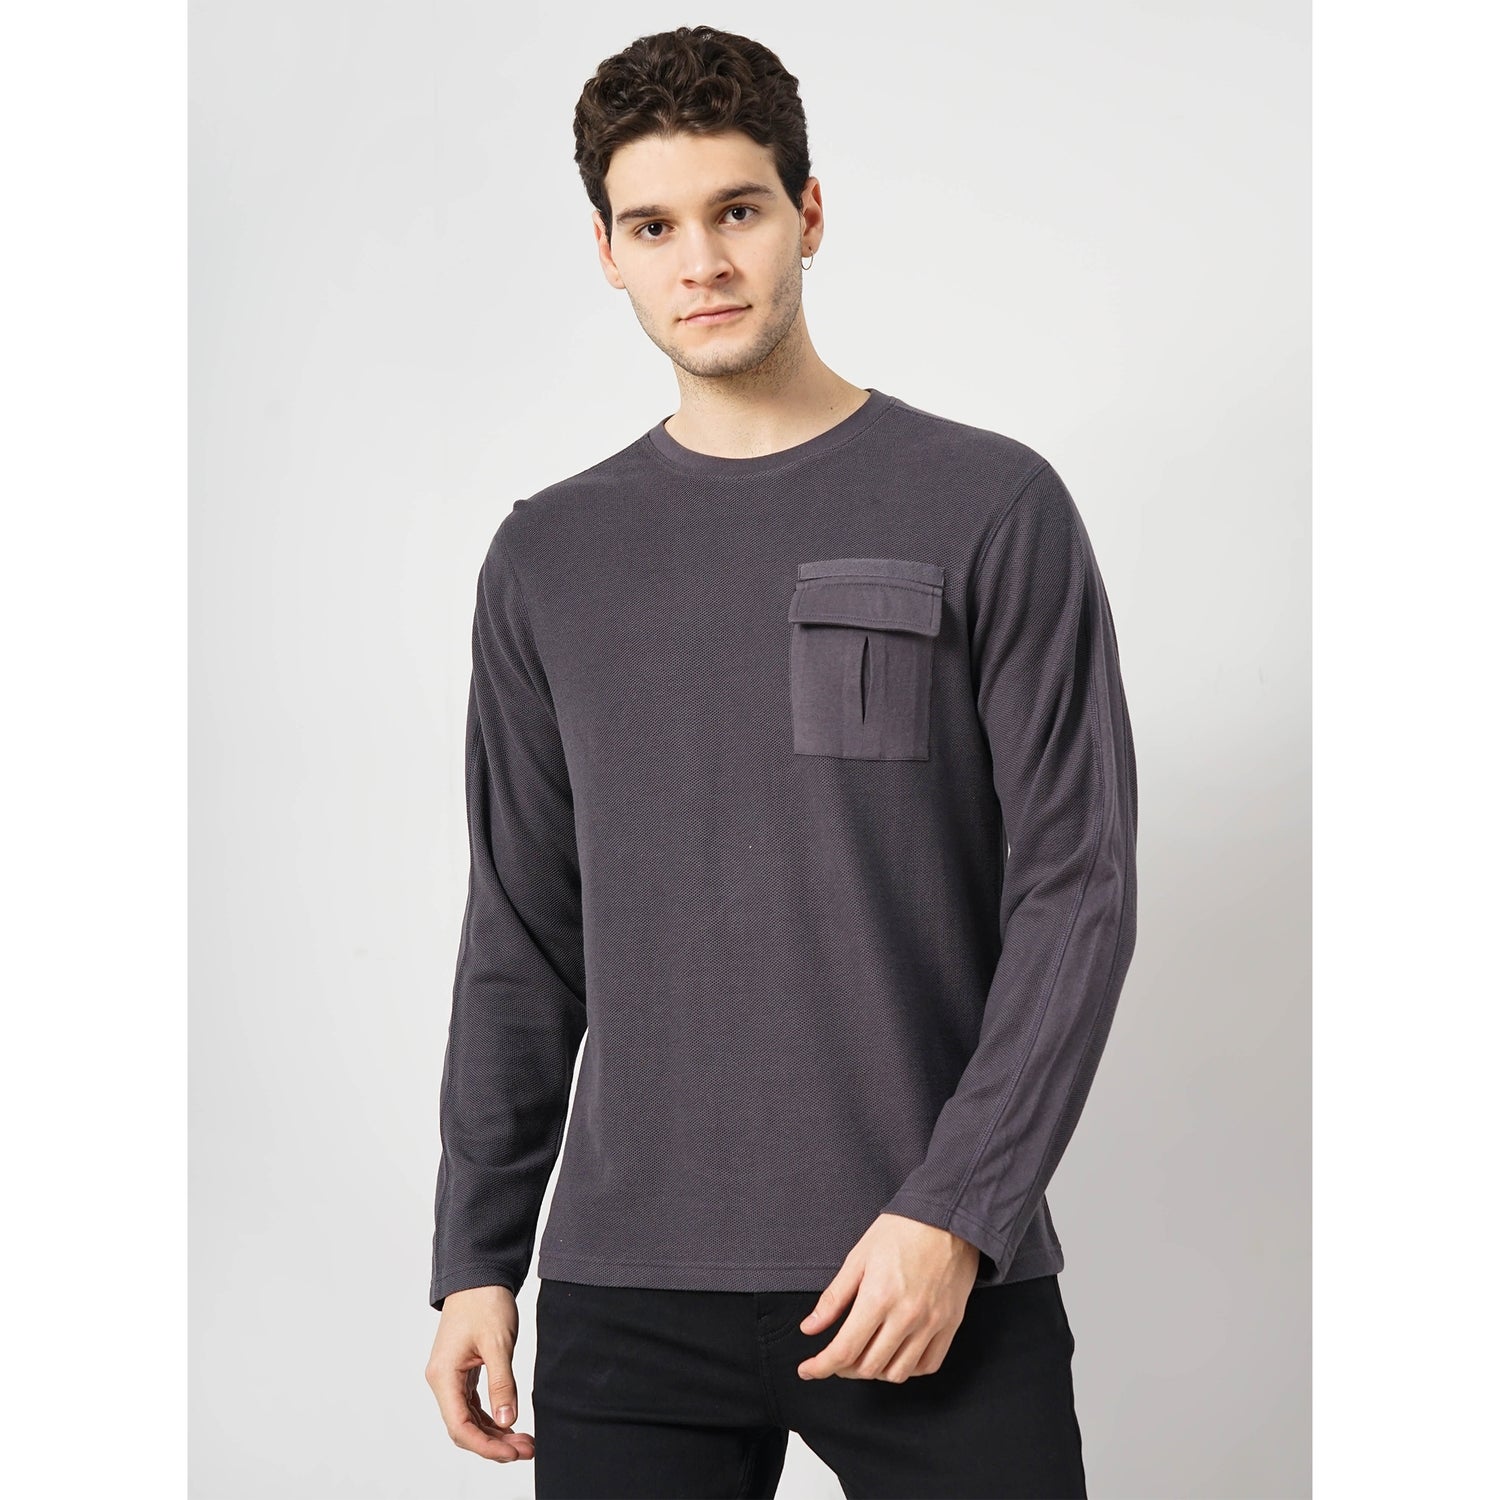 Men Grey Solid Regular Fit Fashion Cotton Textured Tshirt (GELONG)